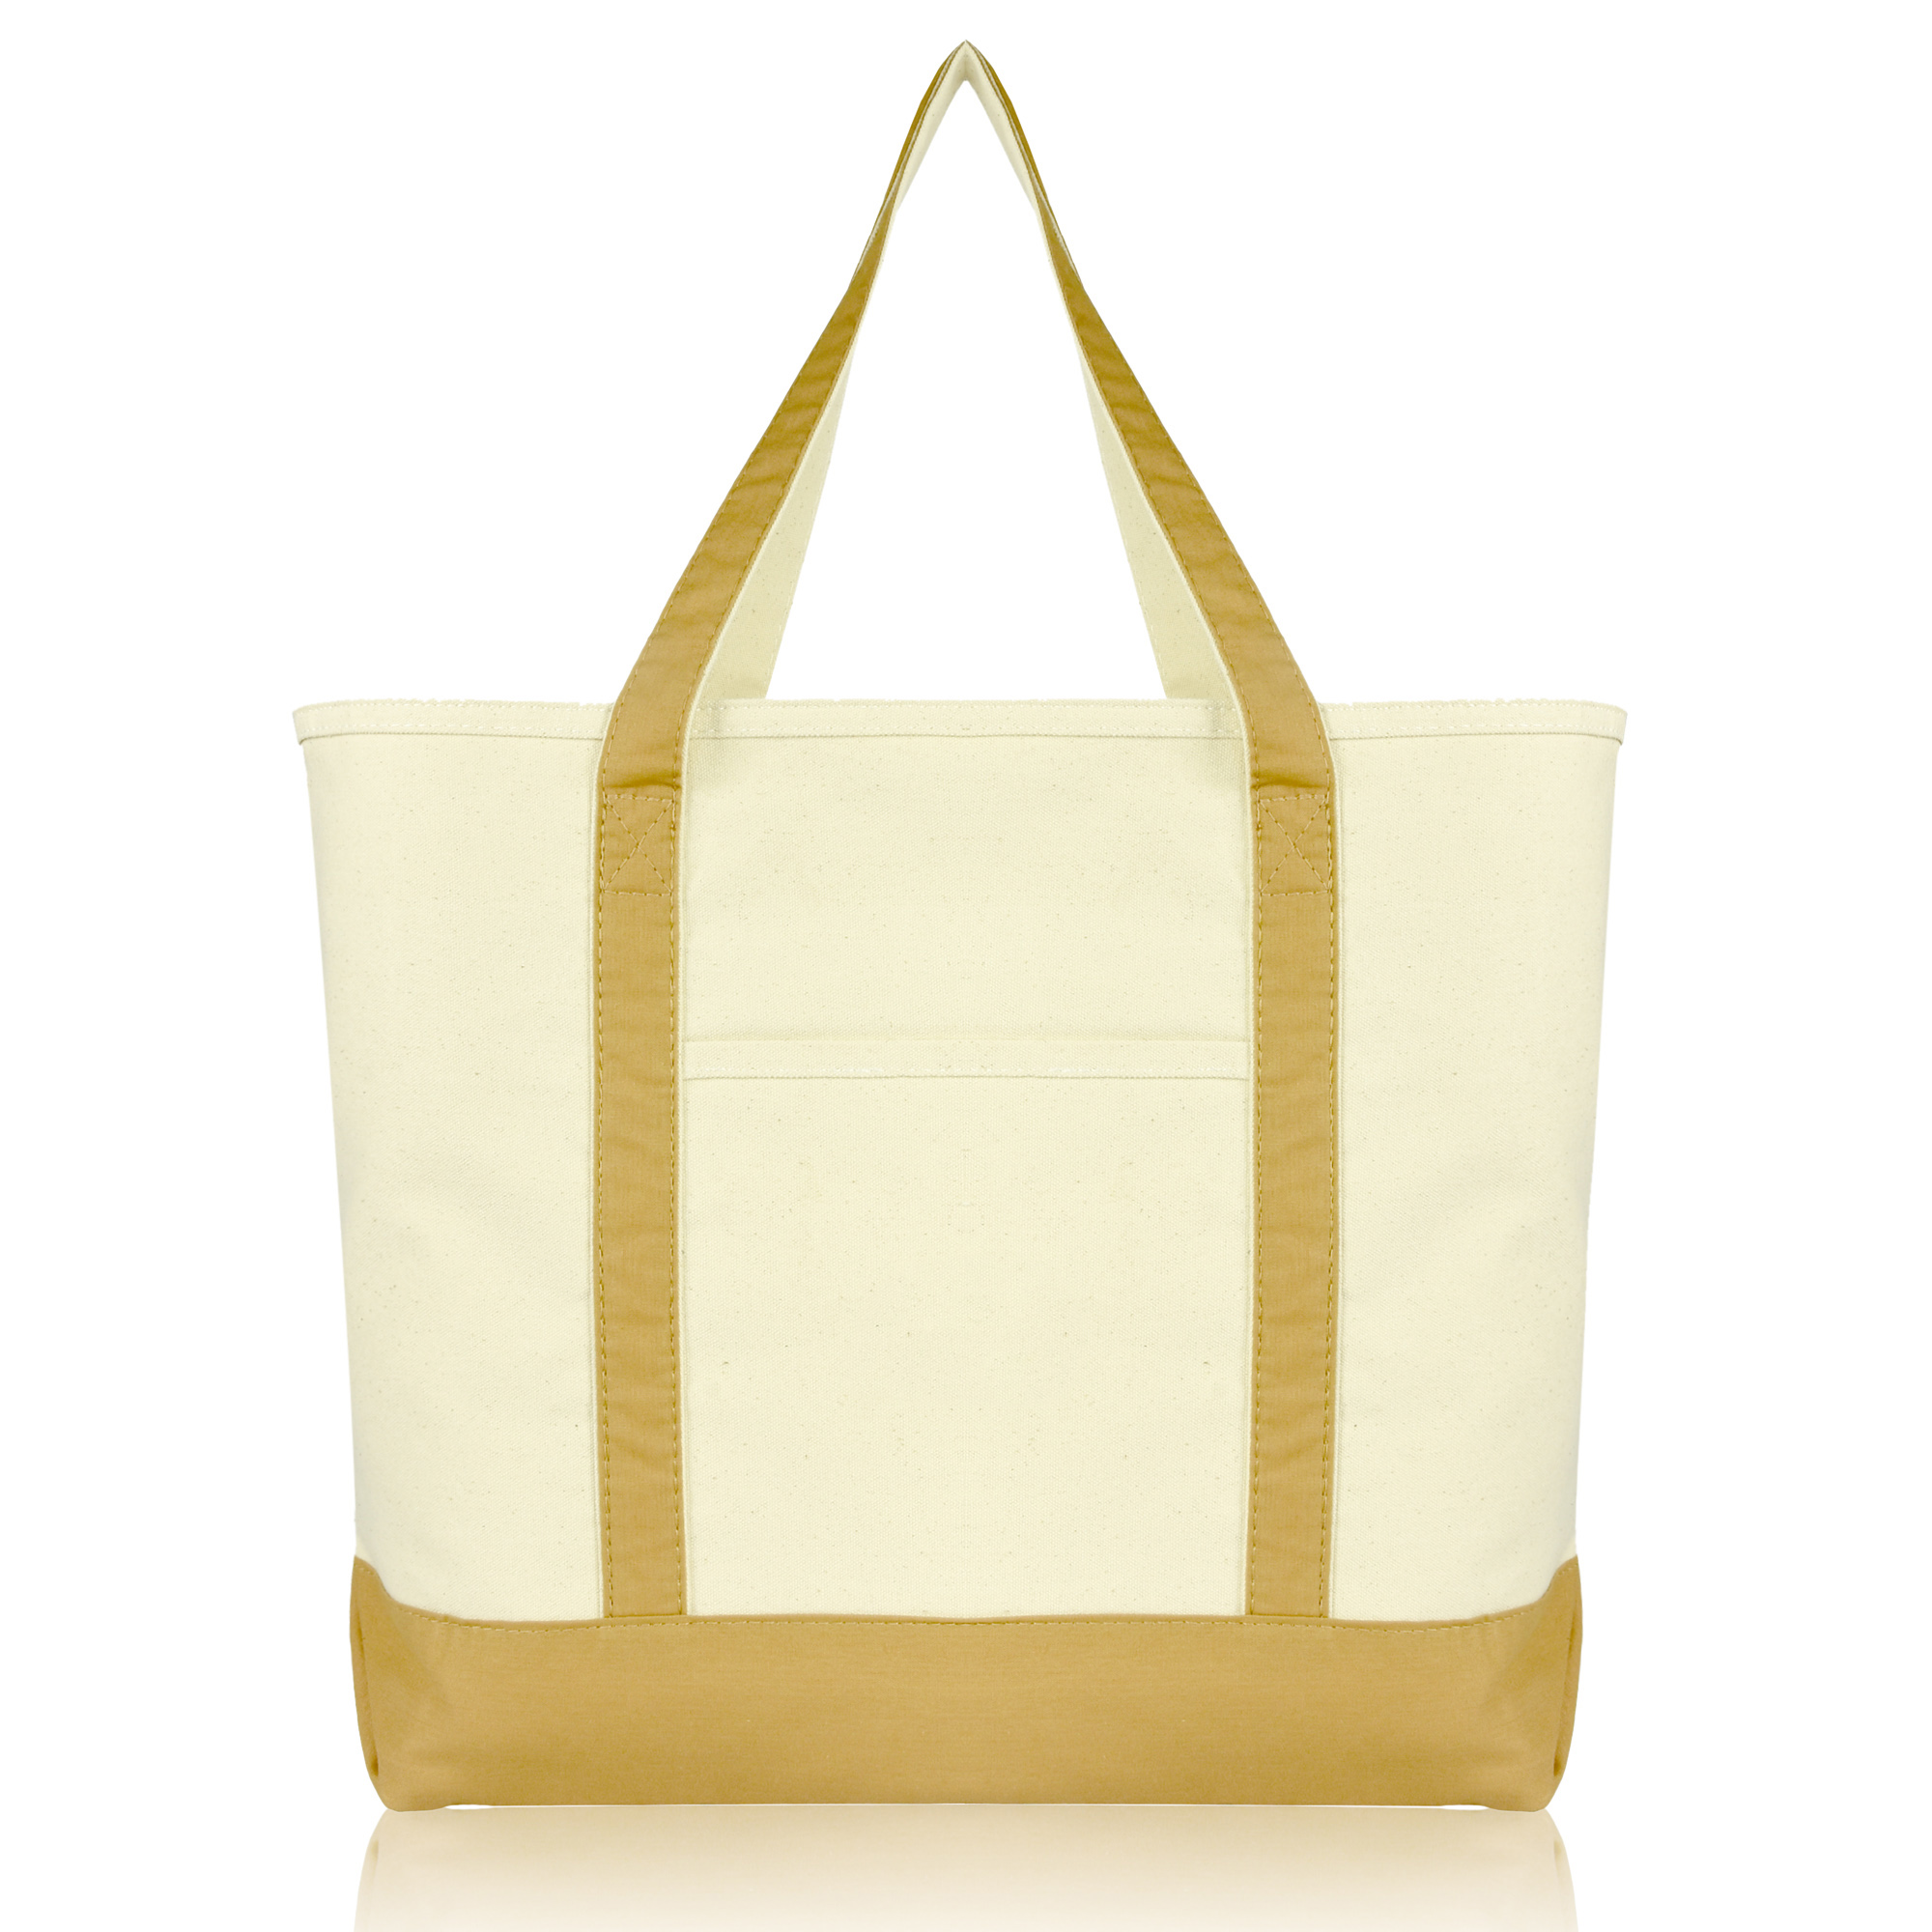 DALIX 22" Cotton Canvas Bag Beach Shopping Zipper in Brown - image 1 of 6